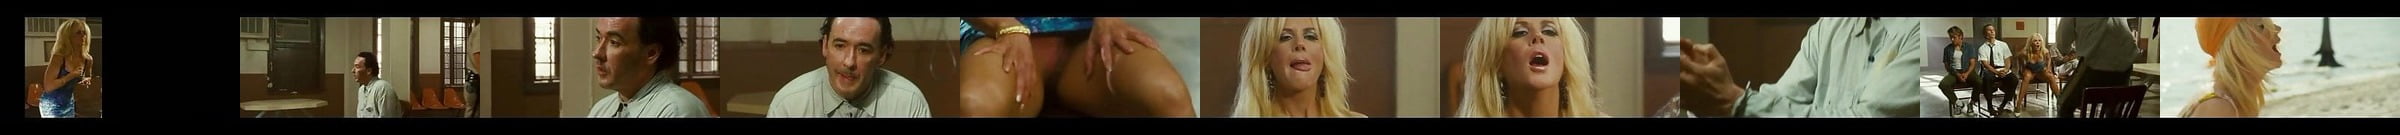 Julie Dreyfus Sex Scene In Inglourious Basterds Slow